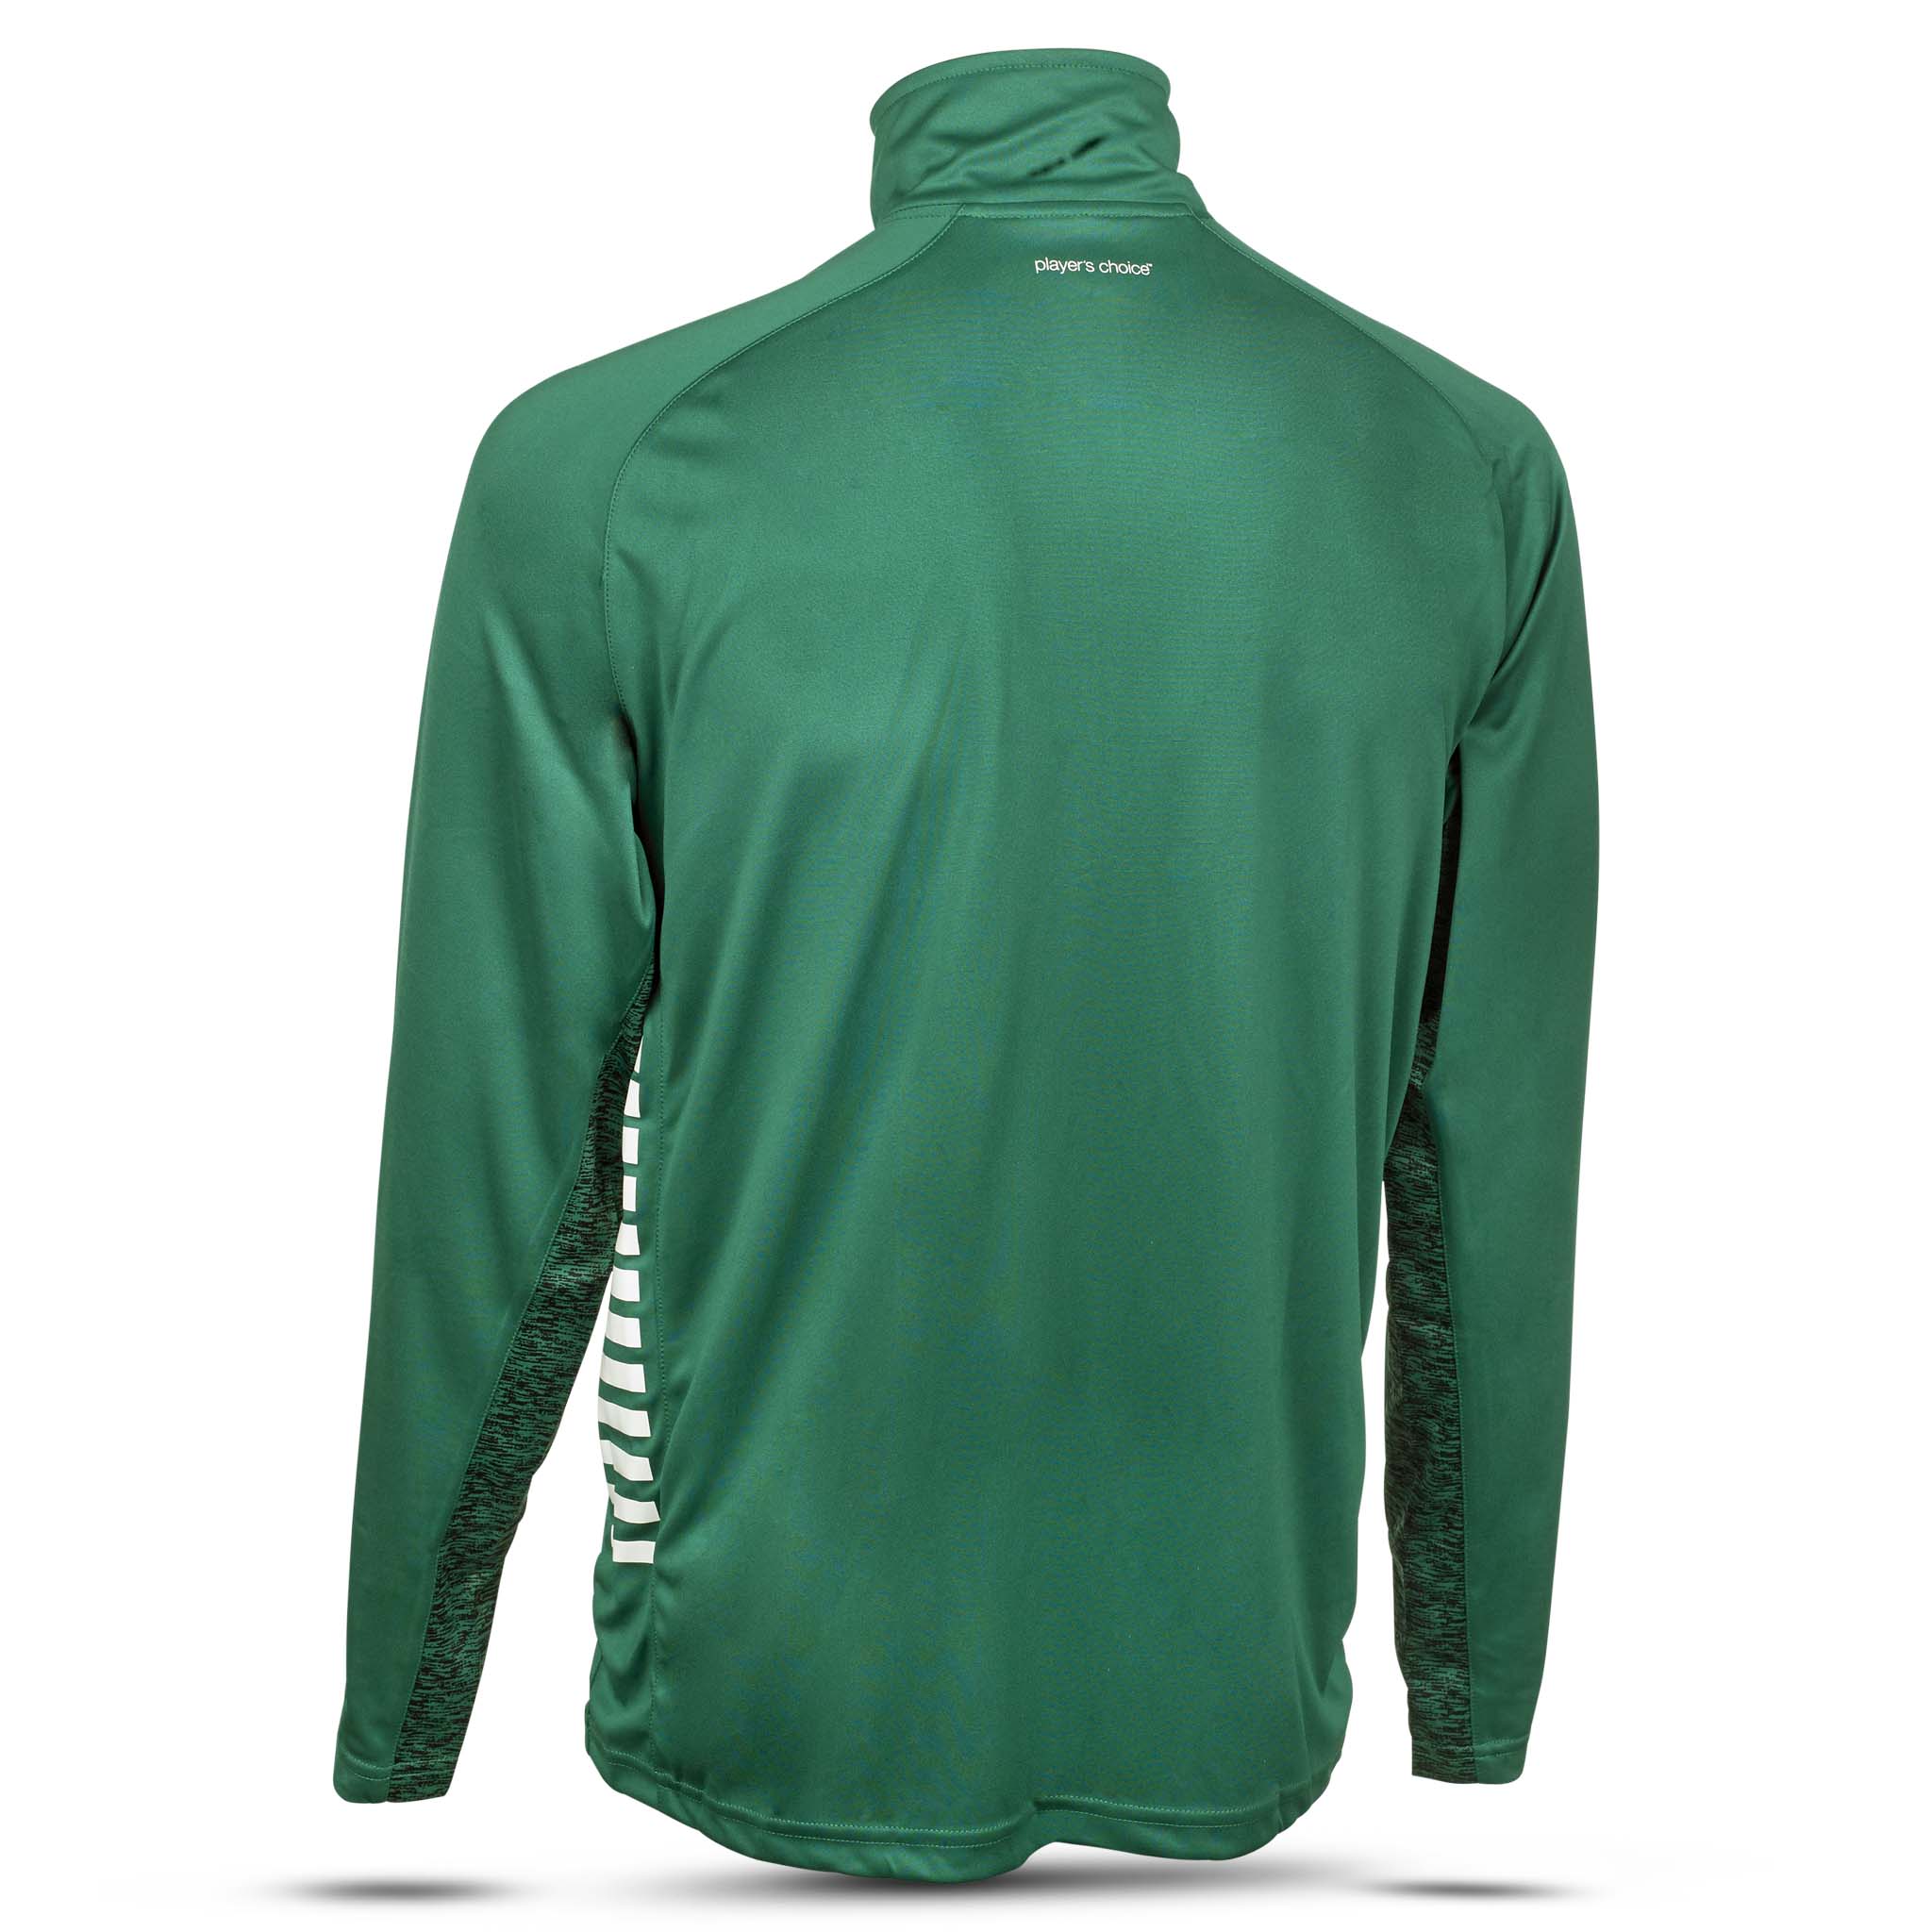 Spain Træningsjakke lynlås #farve_grøn